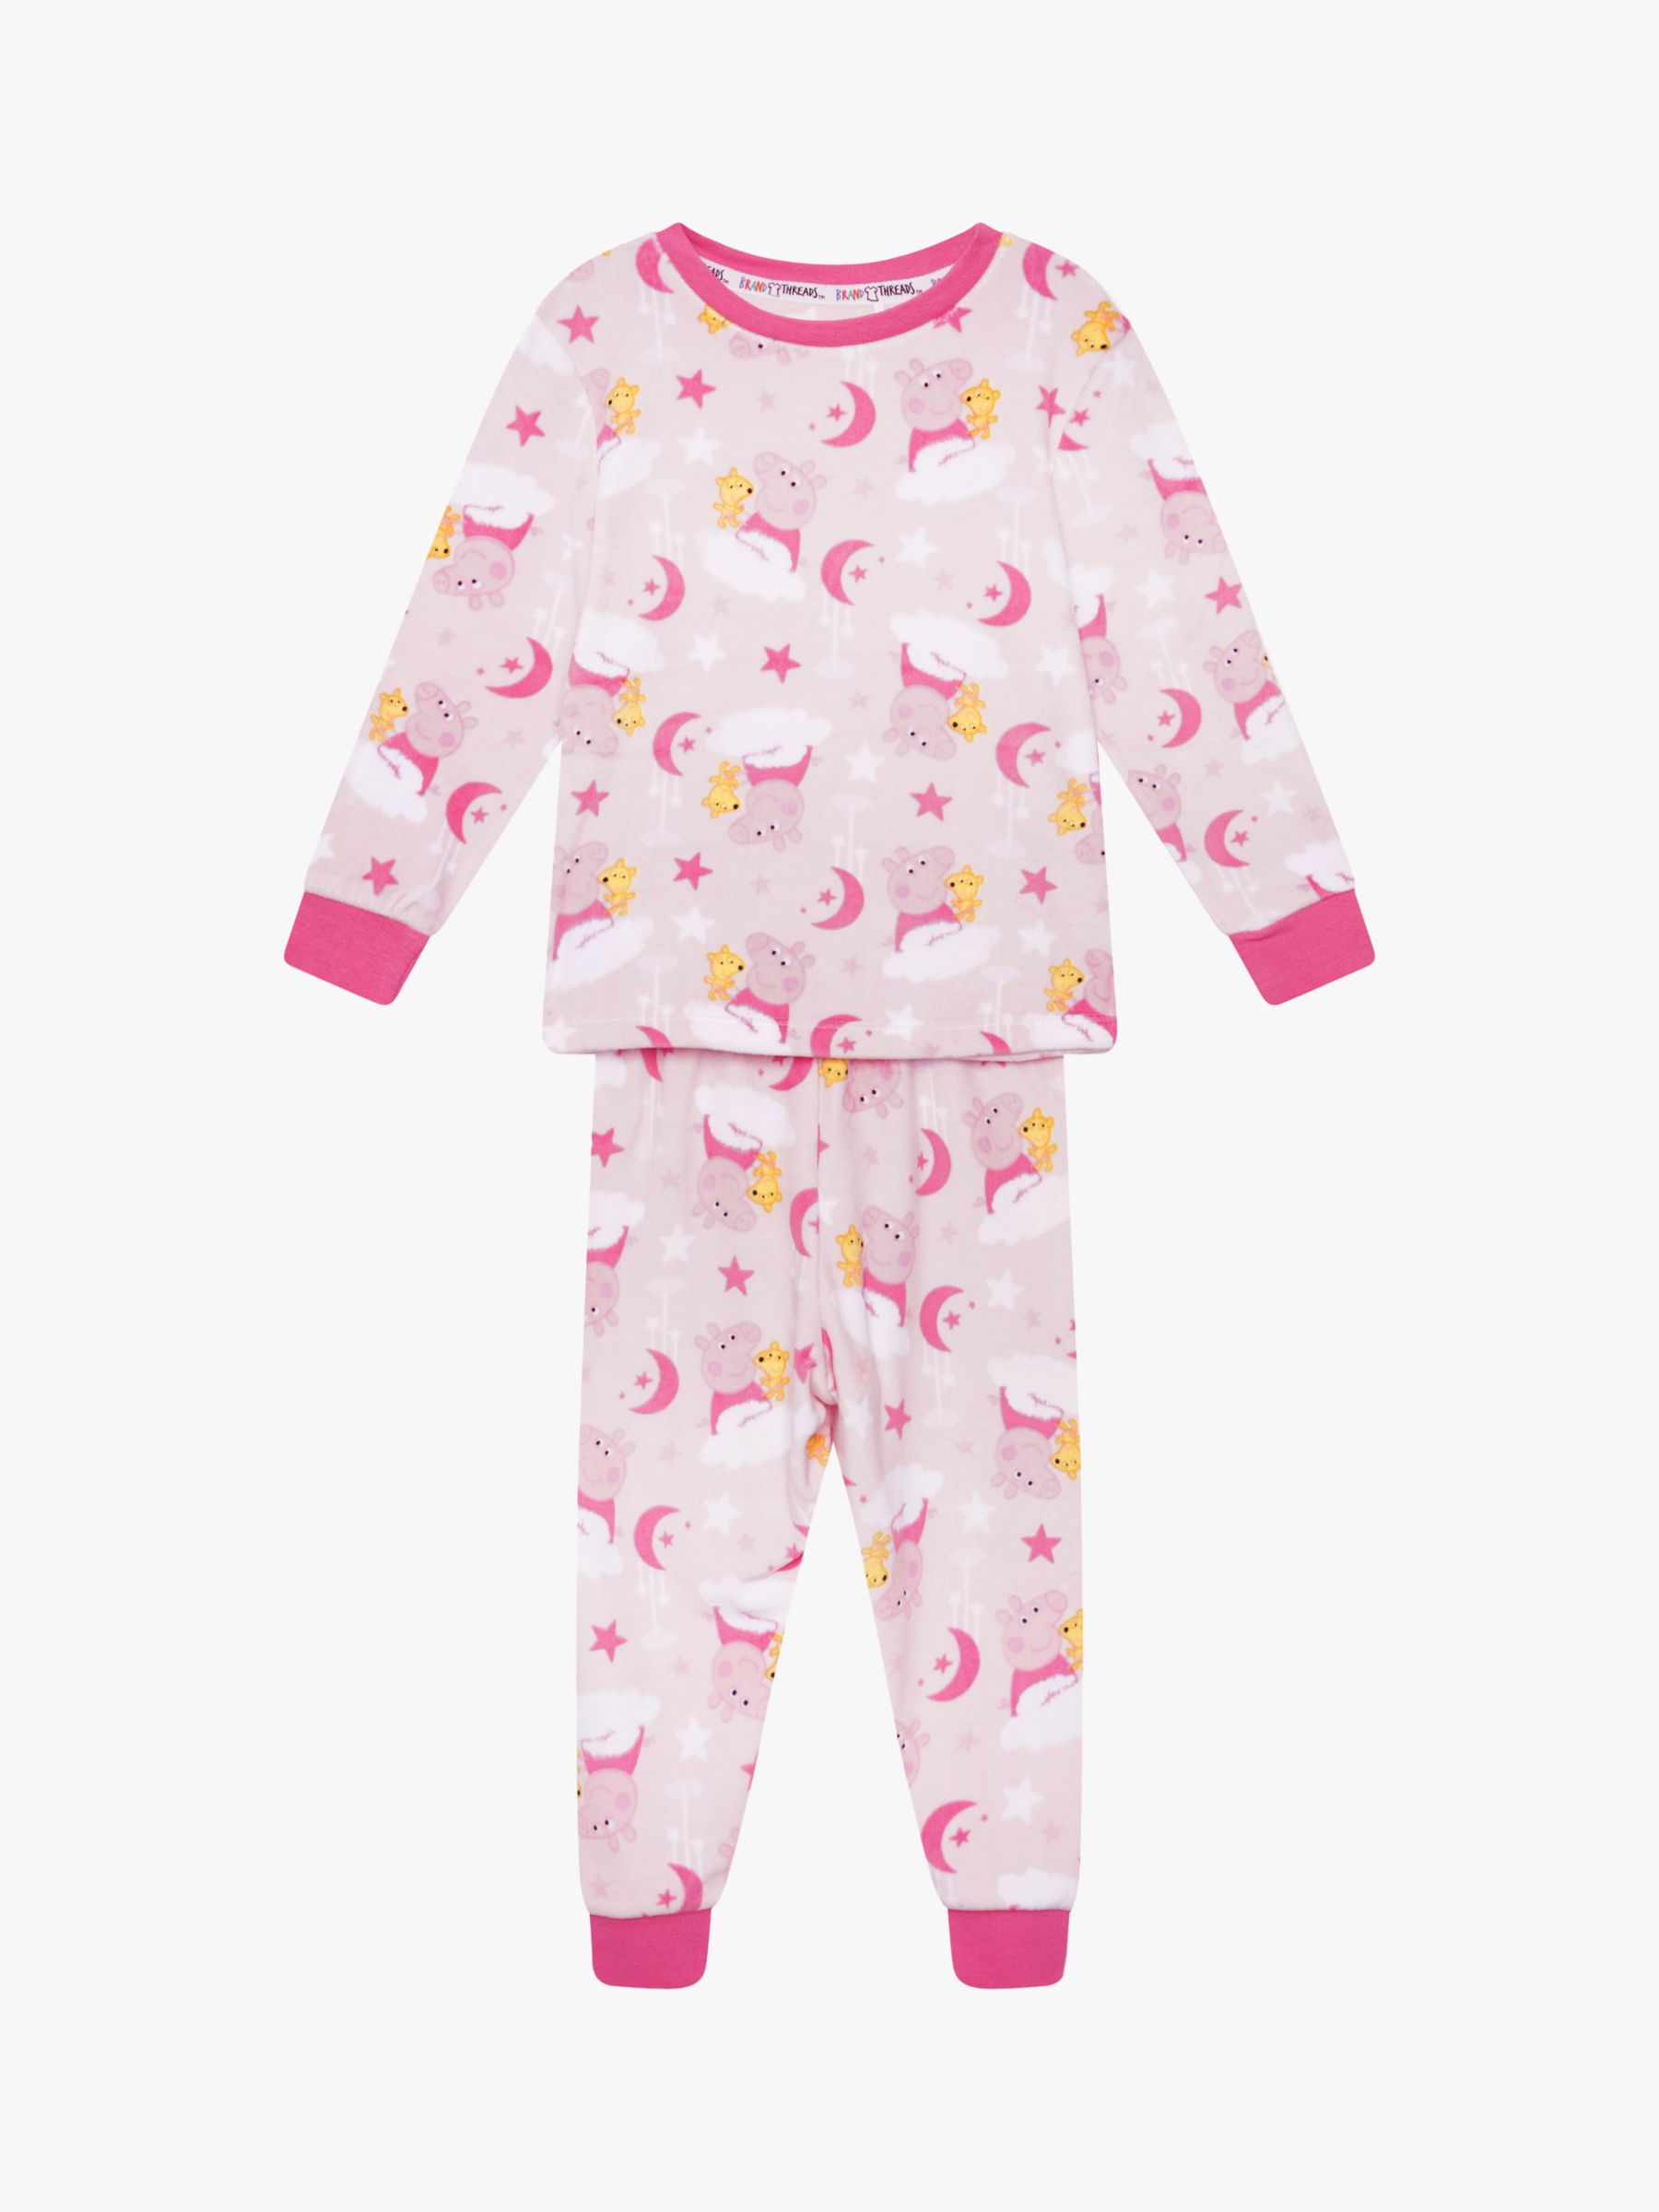 Brand Threads Kids' Peppa Pig Fleece Pyjamas Set at John Lewis & Partners